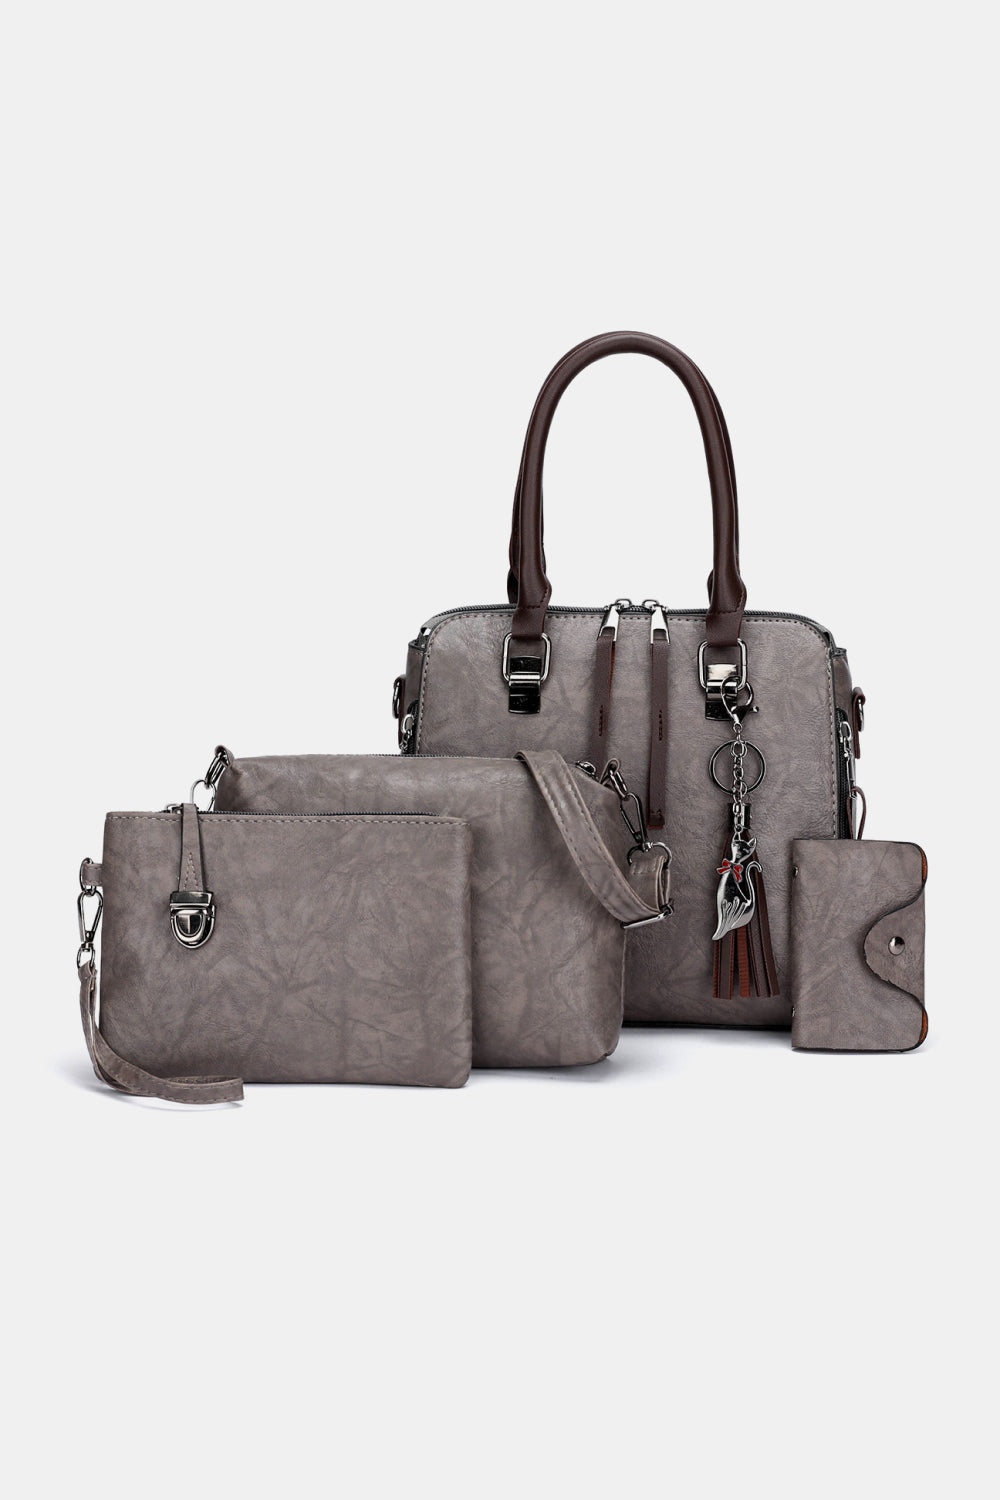 4-Piece PU Leather Bag Set - Tigbuls Fashion